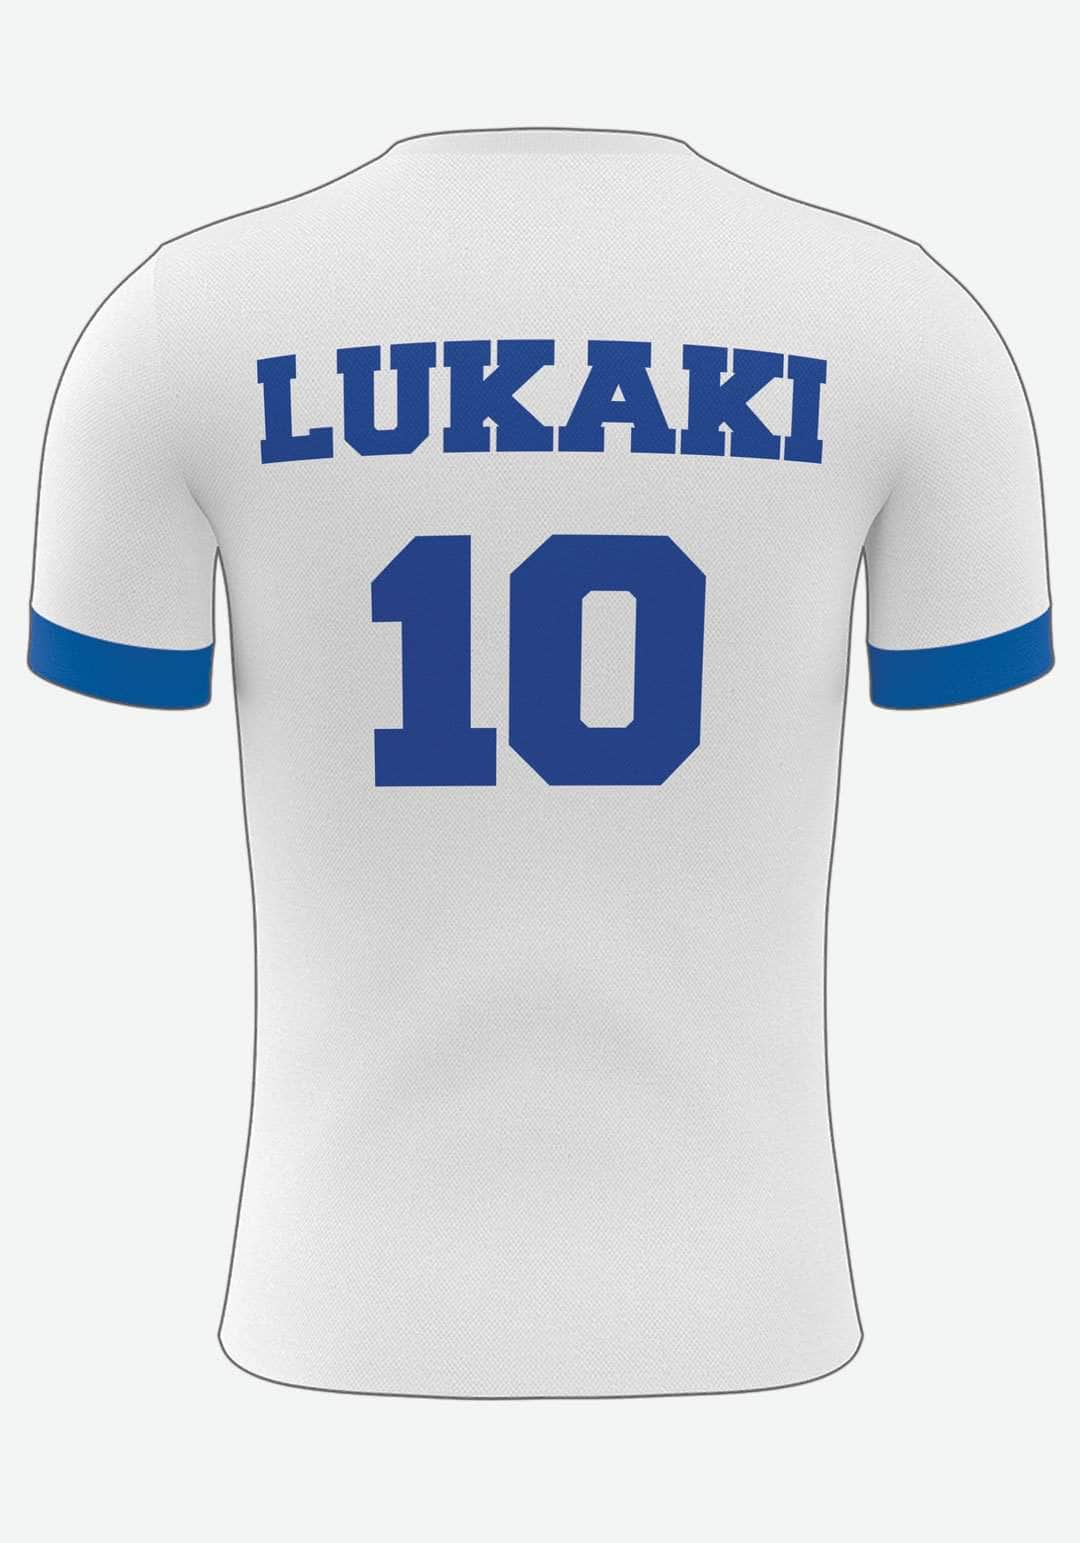 Se Madrid Fodbold plakat - med eget navn og nummer, 30x40 hos Lukaki.dk